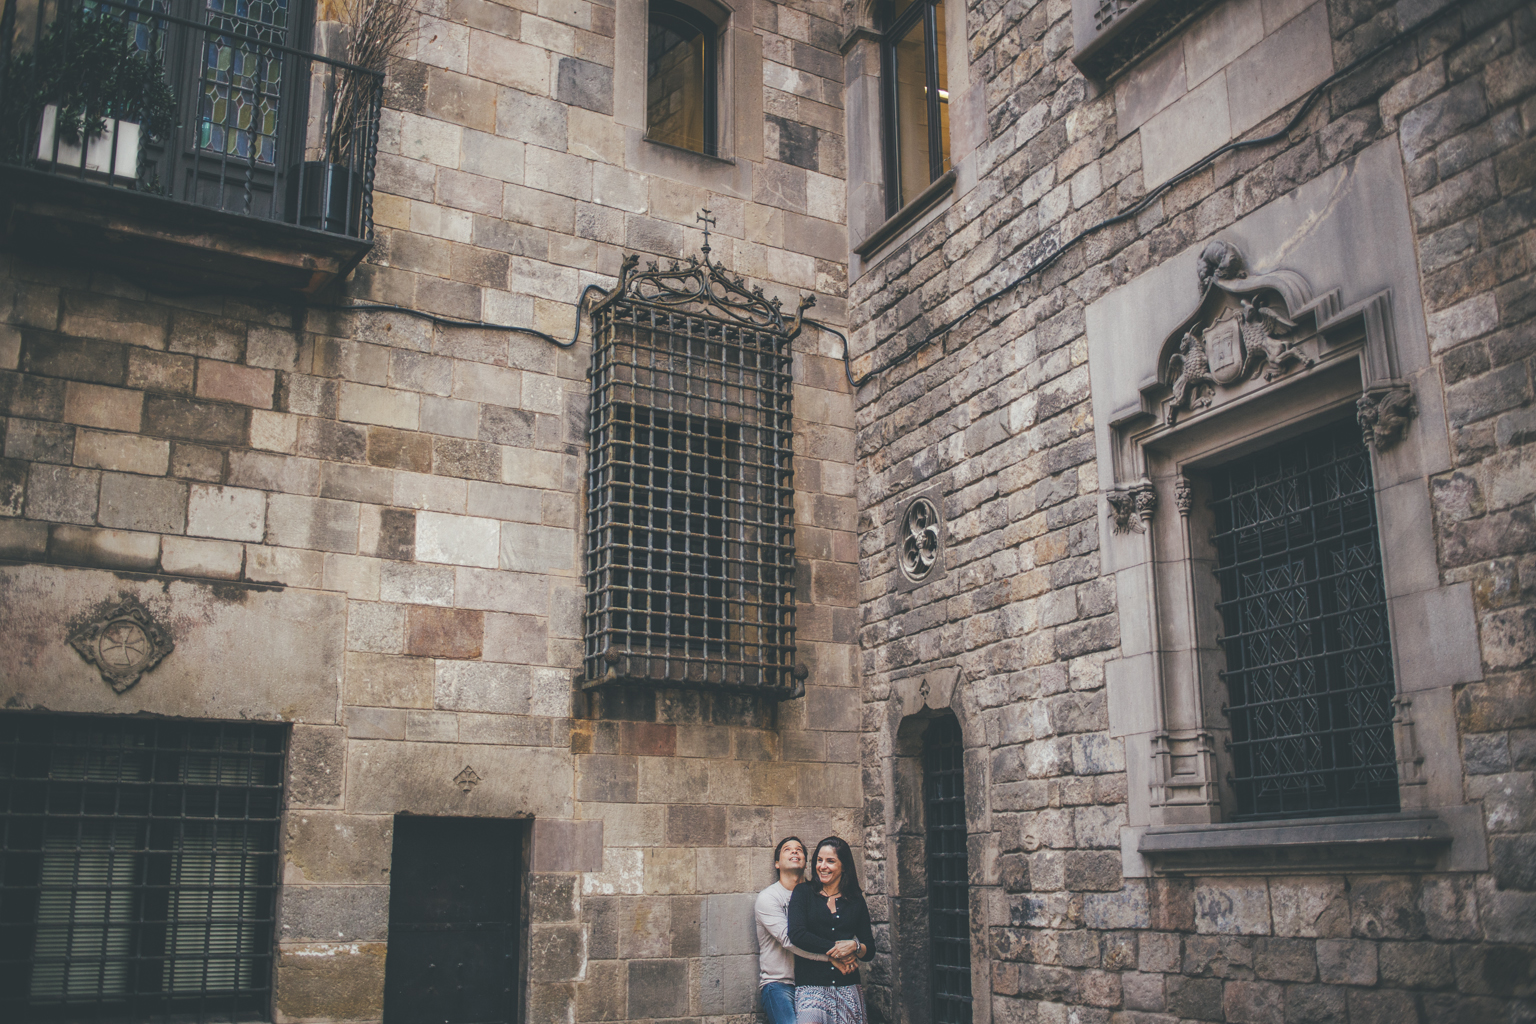 Fotógrafo de Pareja Barcelona :: Barrio Gótico, Born y Parque de la Ciutadella :: Best Barcelona photographer :: Fotografía romántica :: Fotógrafo natural en Barcelona :: Fotografía de pareja :: Preboda :: Love Session :: Romantic photographer